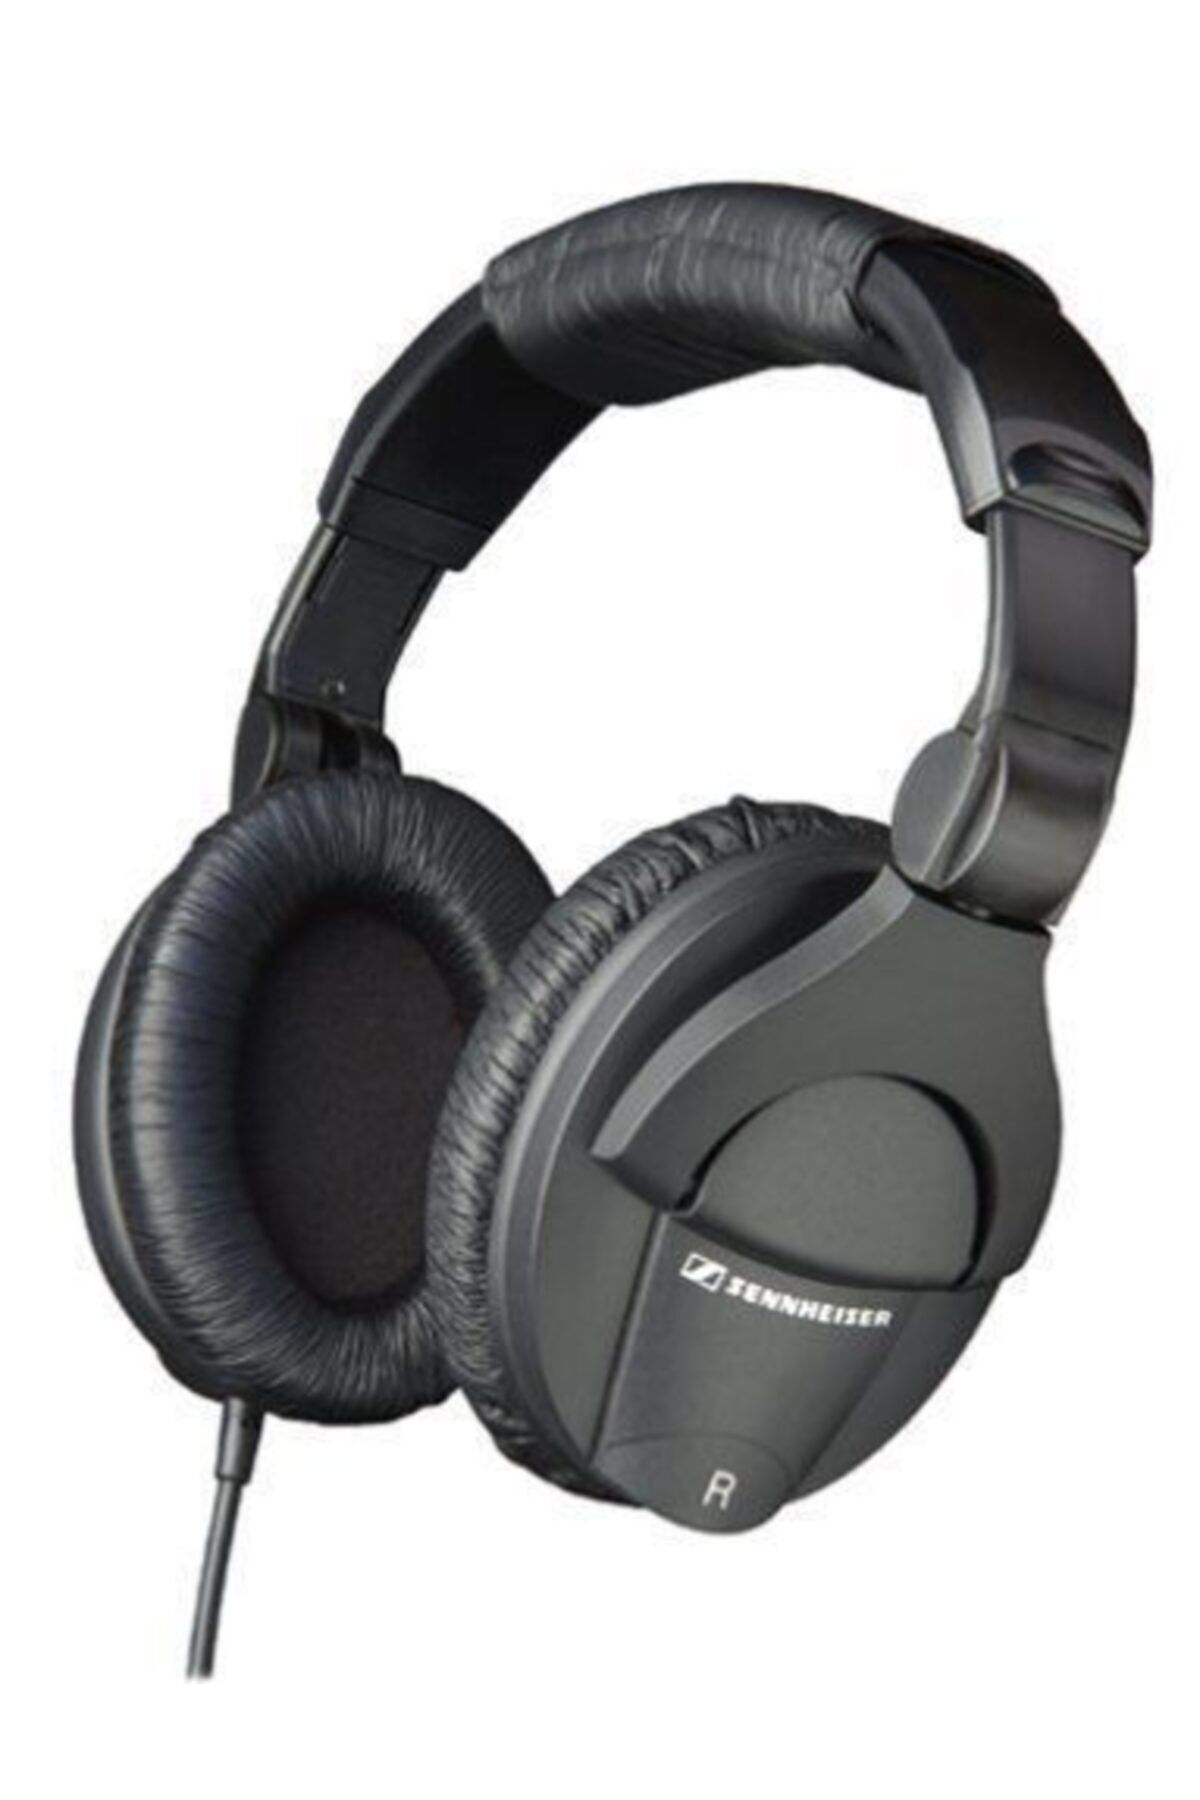 Sennheiser Hd 280 Pro Headphones